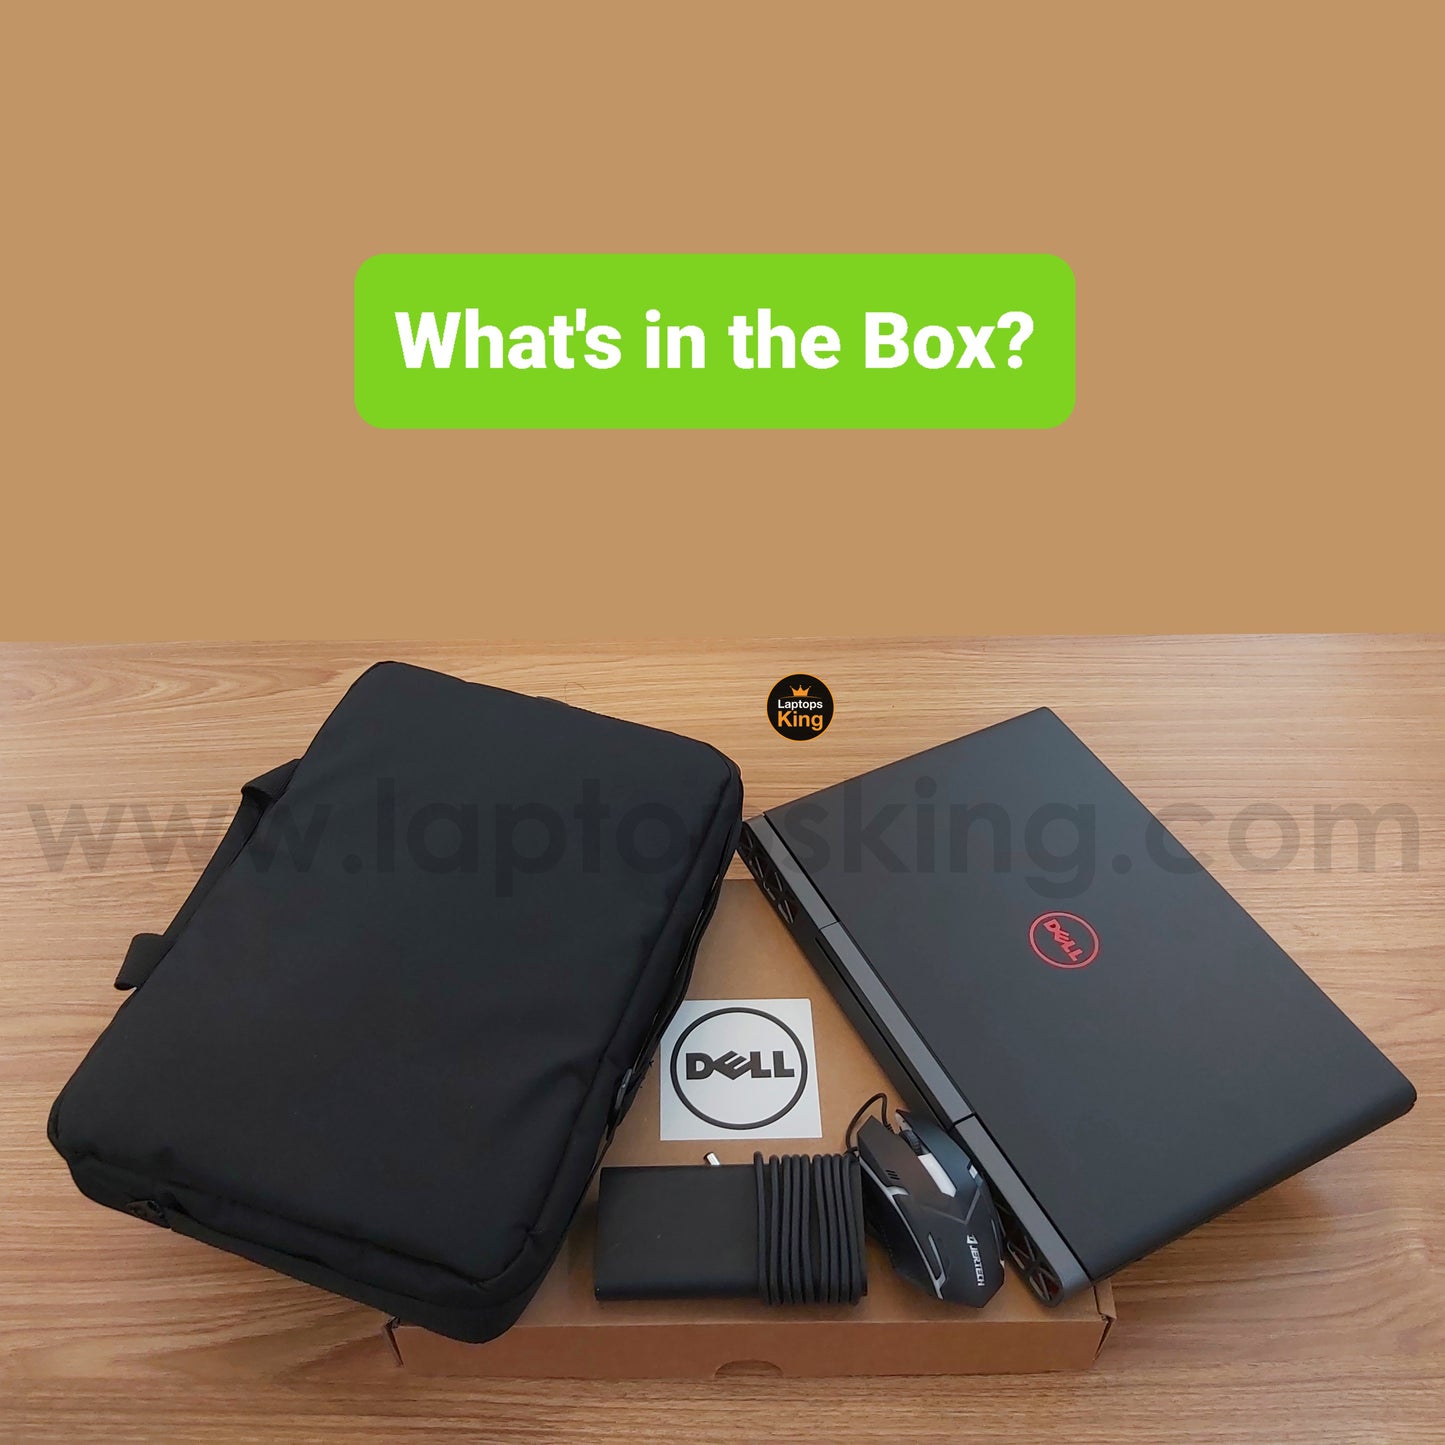 Dell Inspiron 15 7000 i7-7700hq Gtx 1050 Ti 4k Gaming Edition Laptop (Open Box)